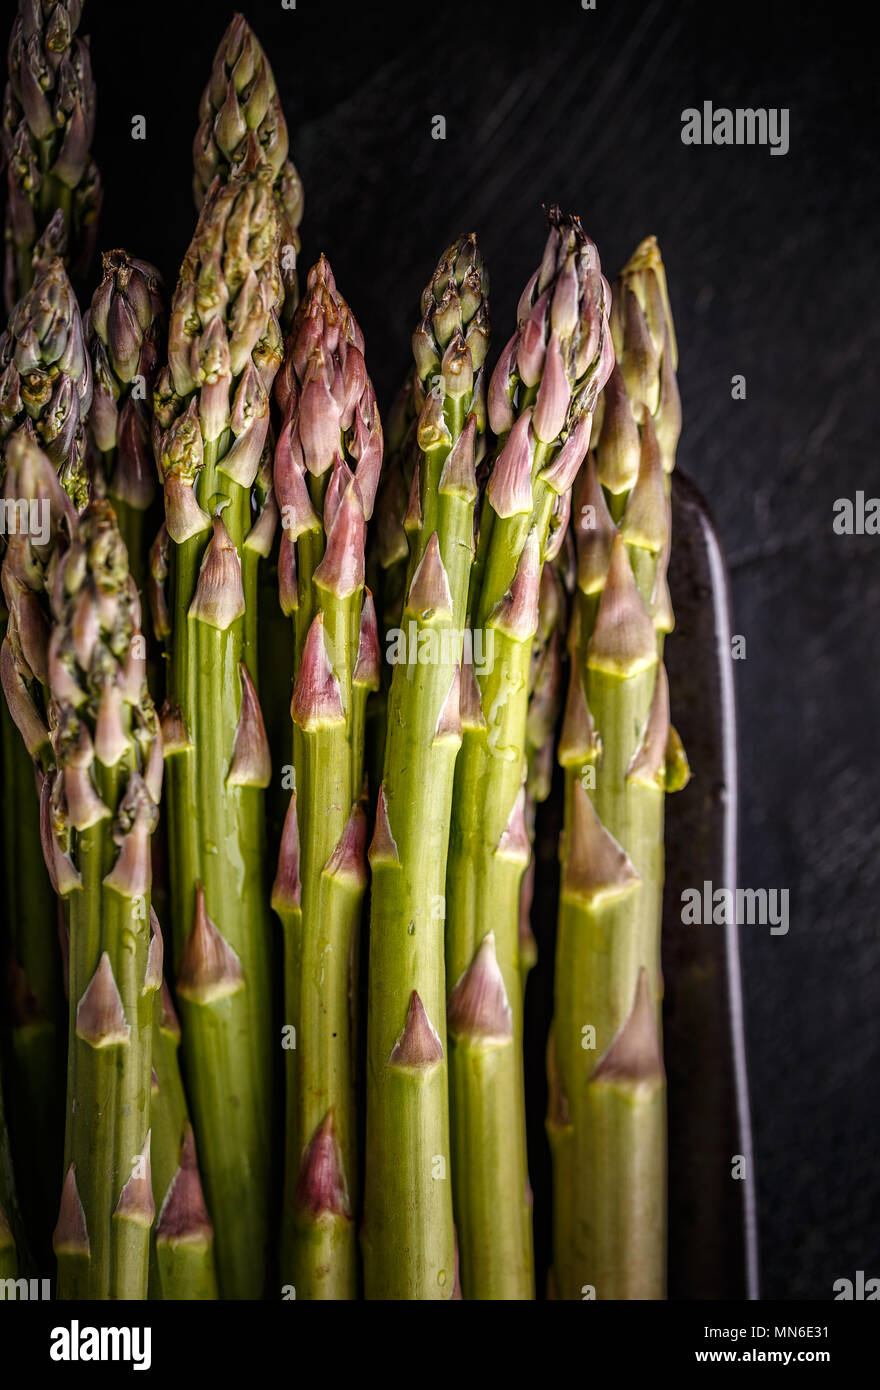 Fresh harvested asparagus on black background Stock Photo